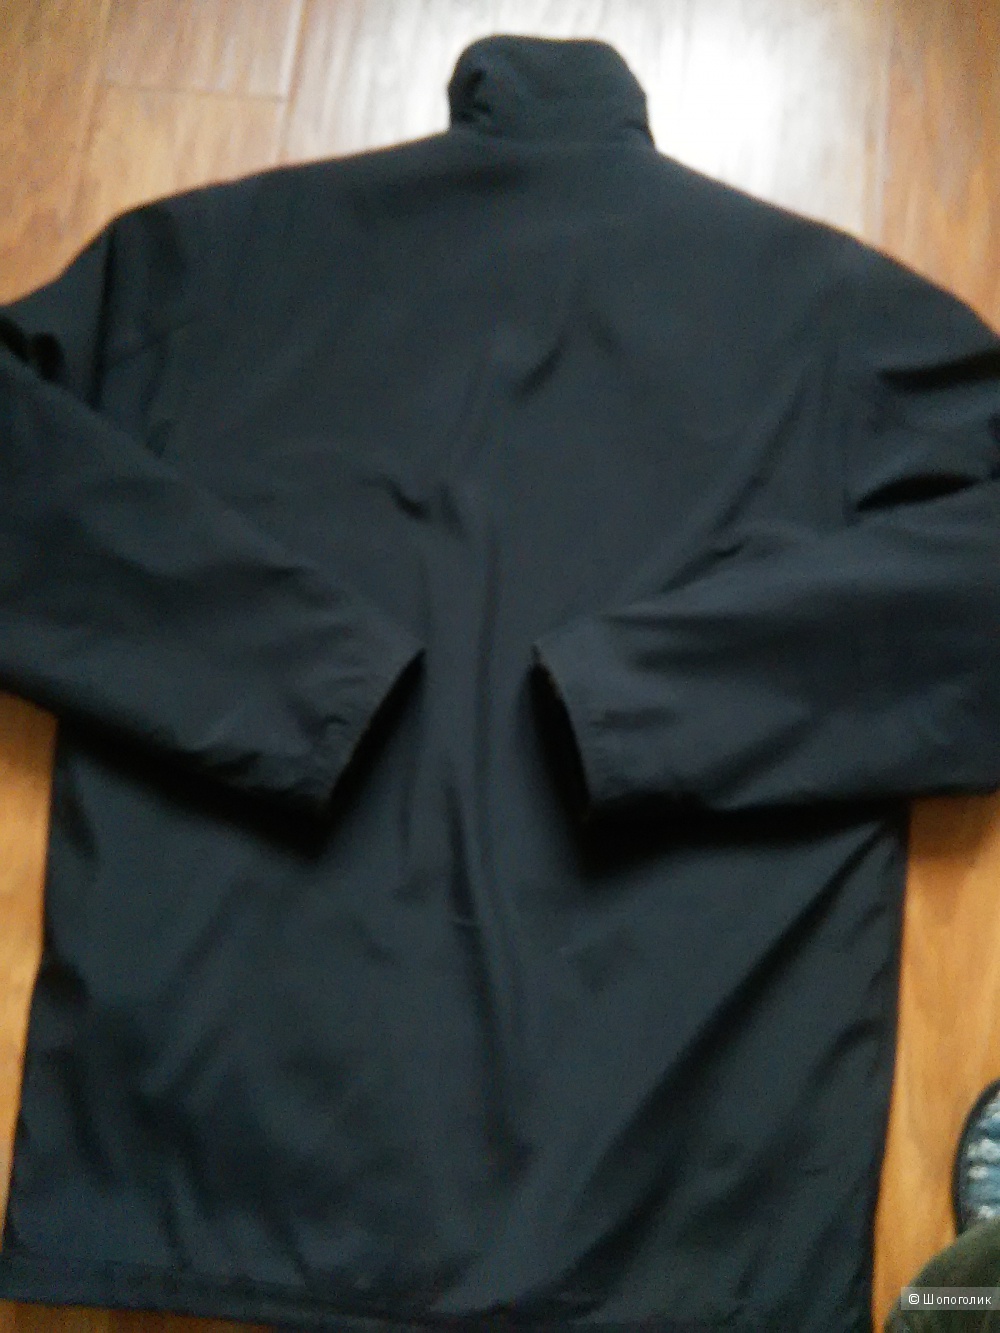 Куртка на натуральном меху LAGERFELD (Франция), р. 52-54, черная